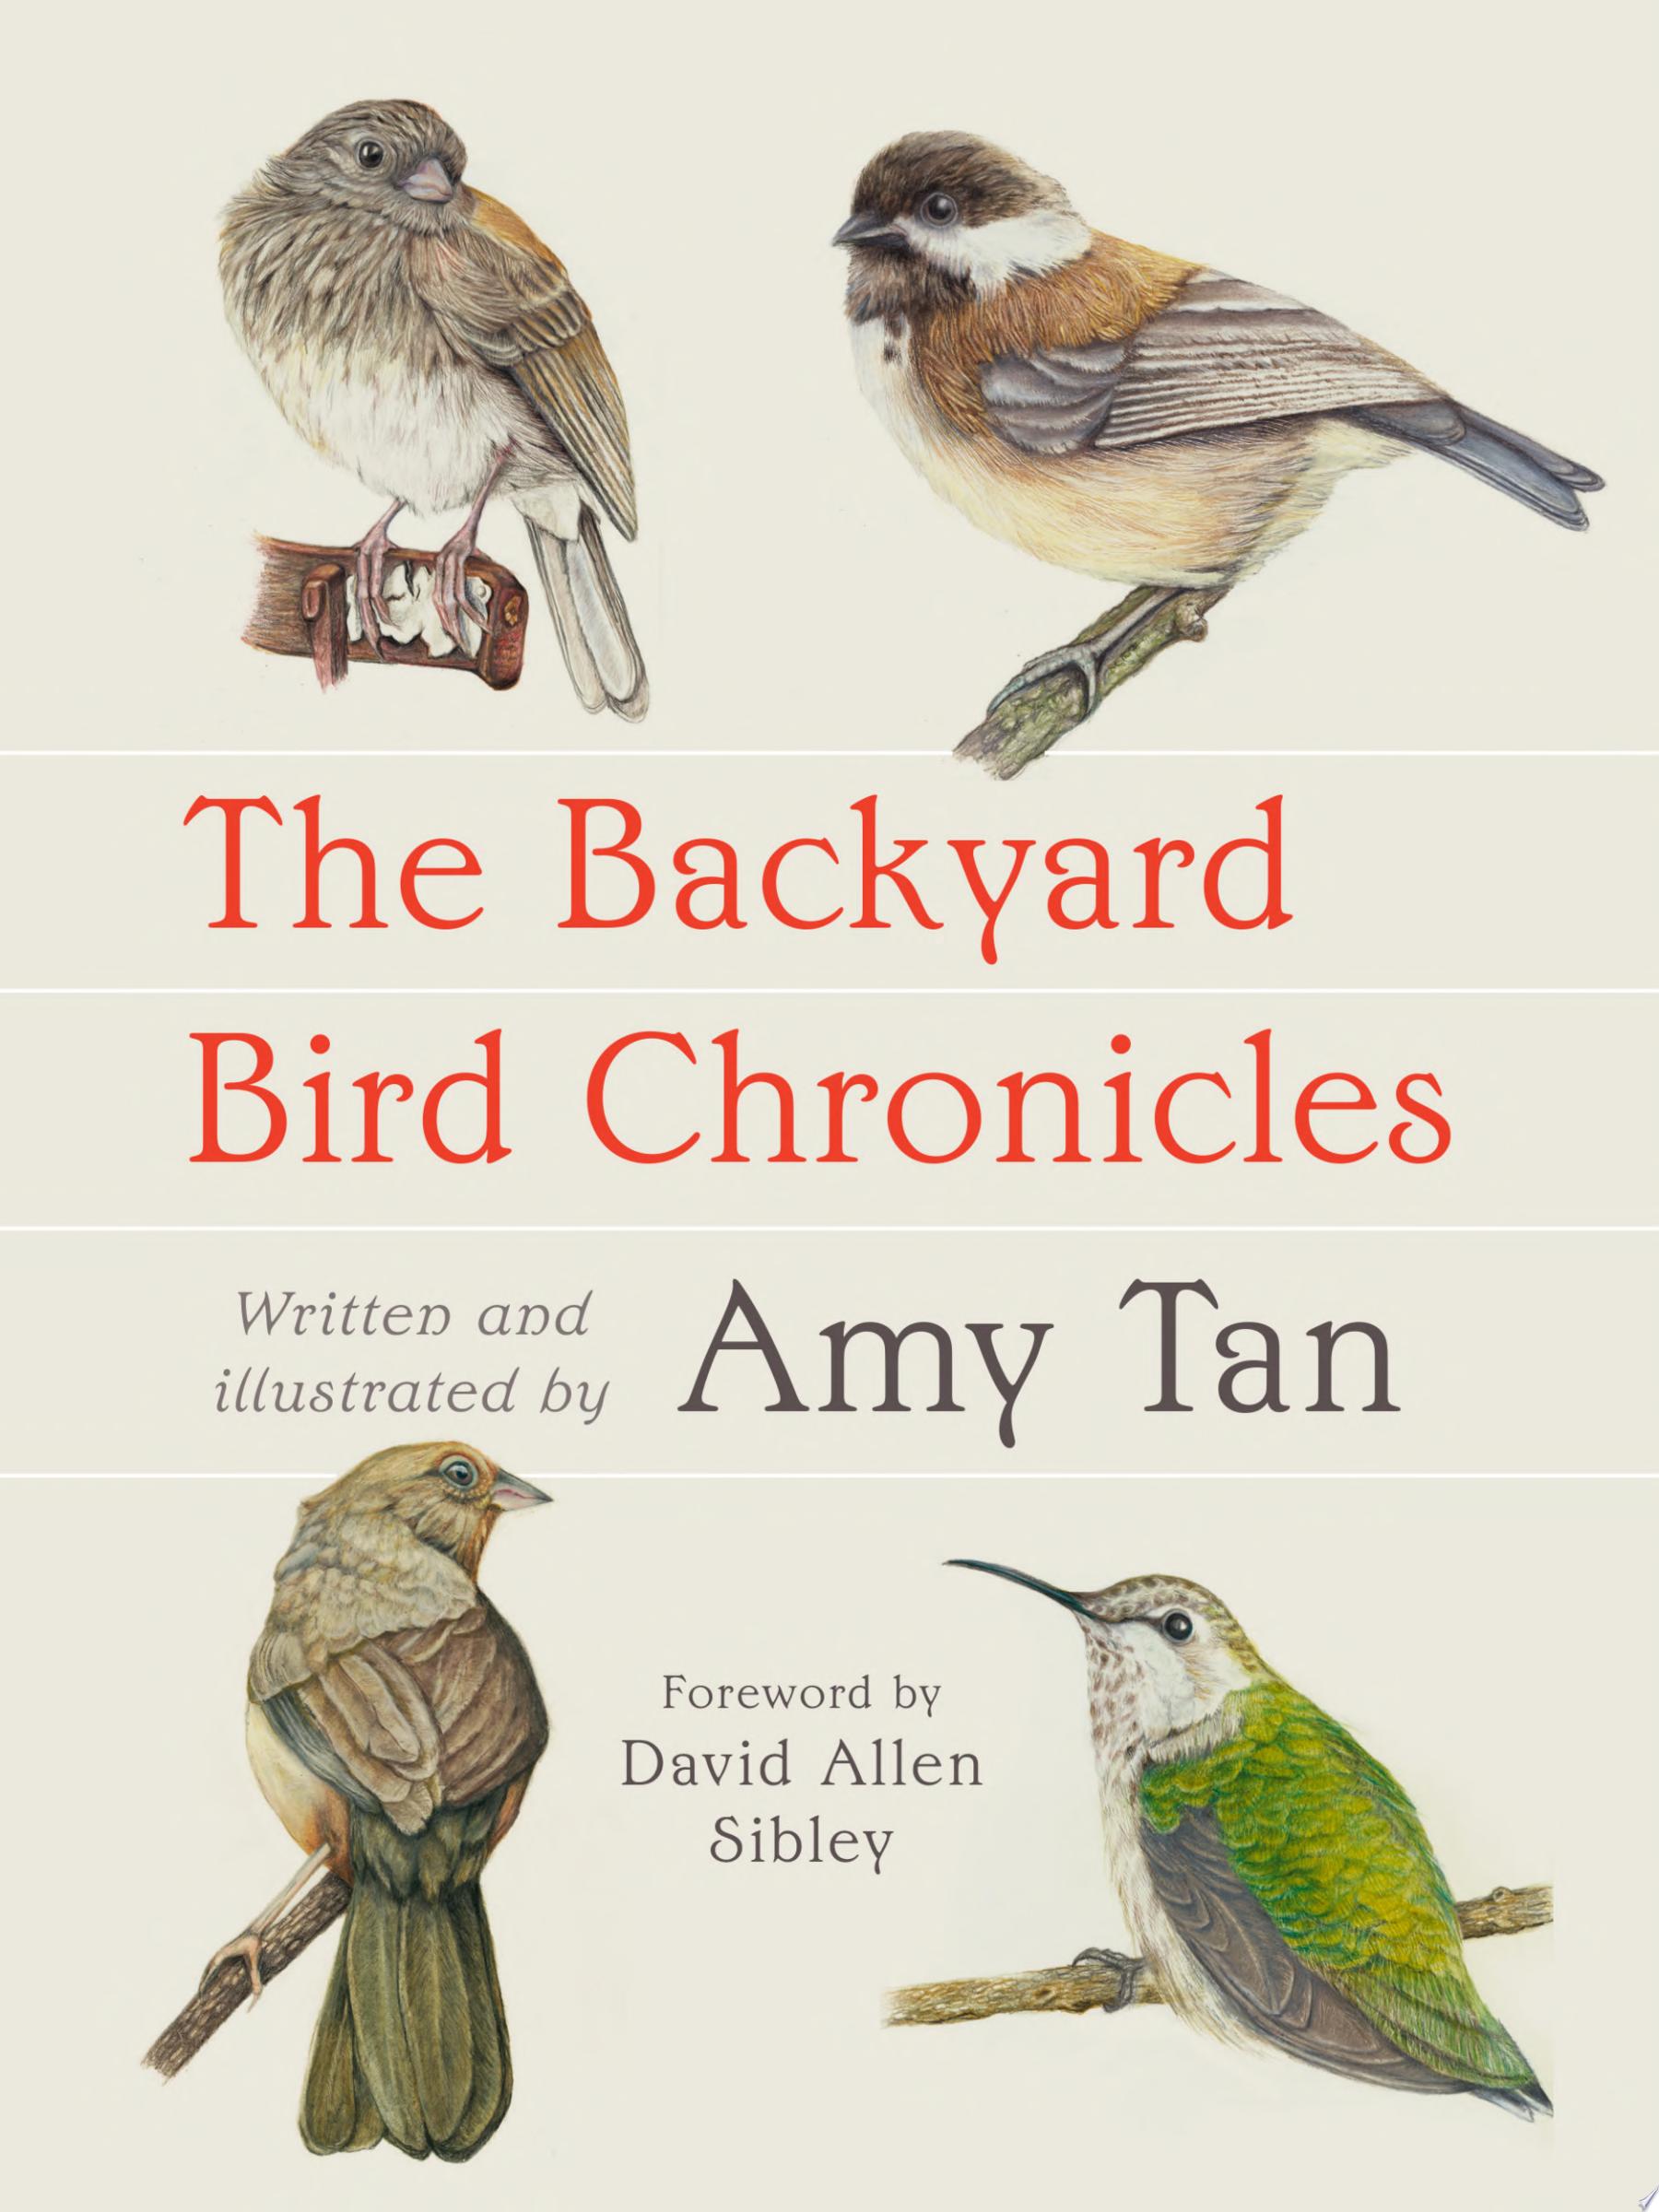 Image for "The Backyard Bird Chronicles"